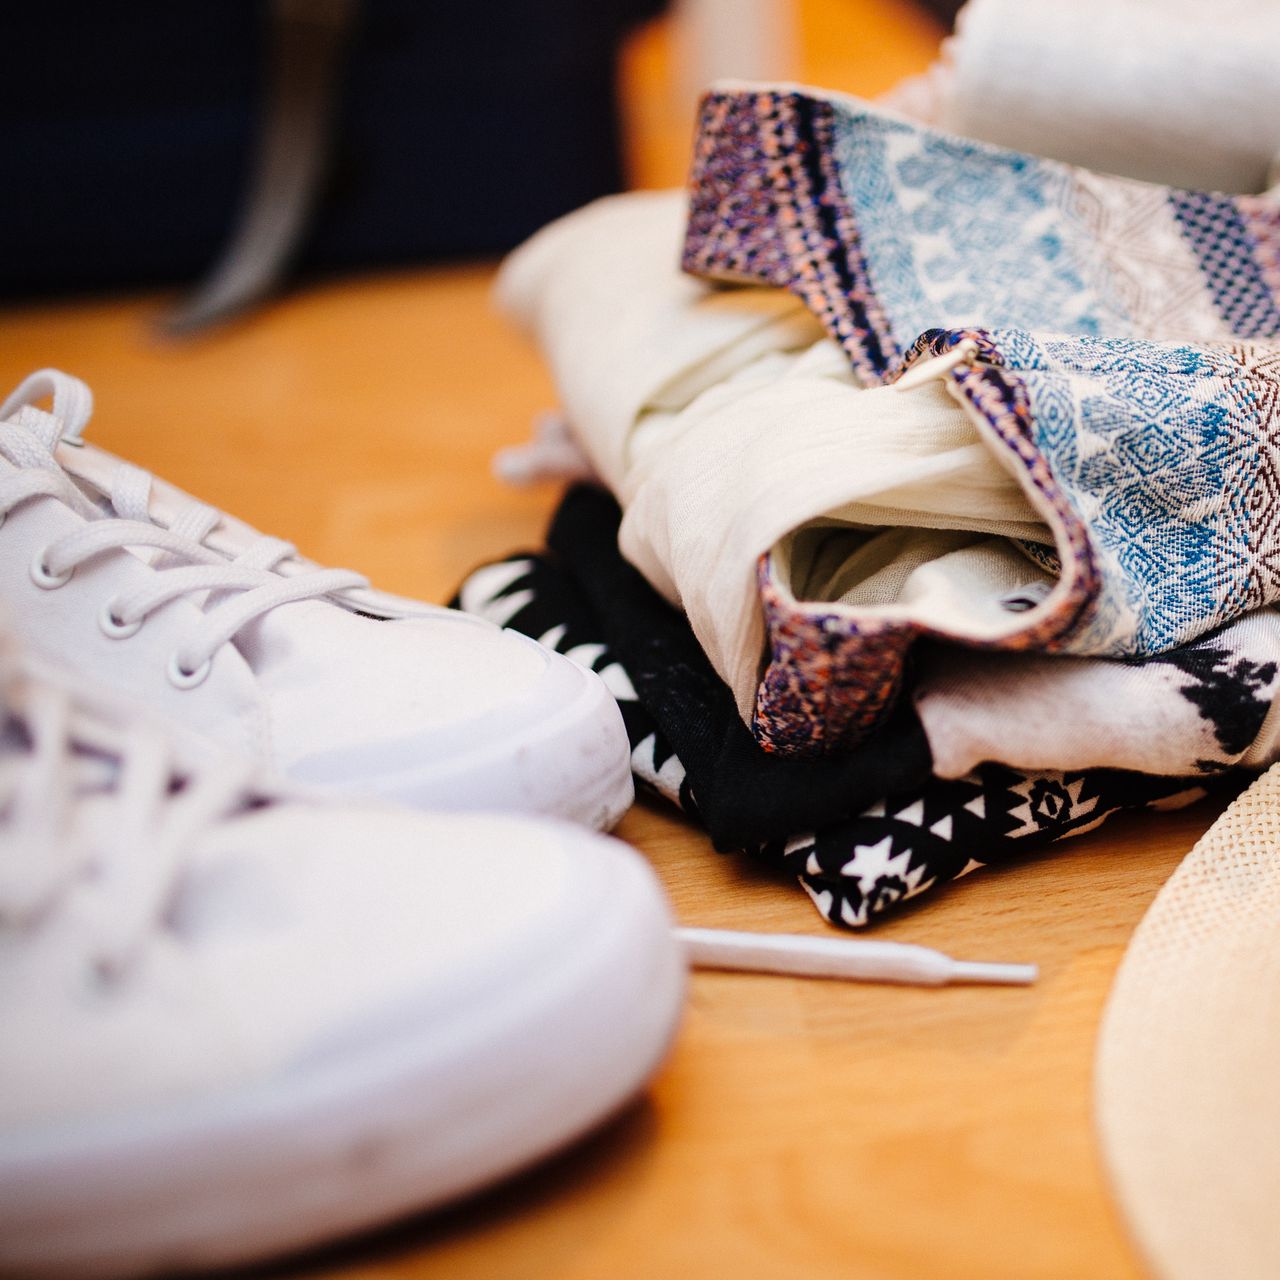 Swap things. Одежда и обувь. Текстиль одежда. Текстильные вещи. Одежда обувь текстиль.